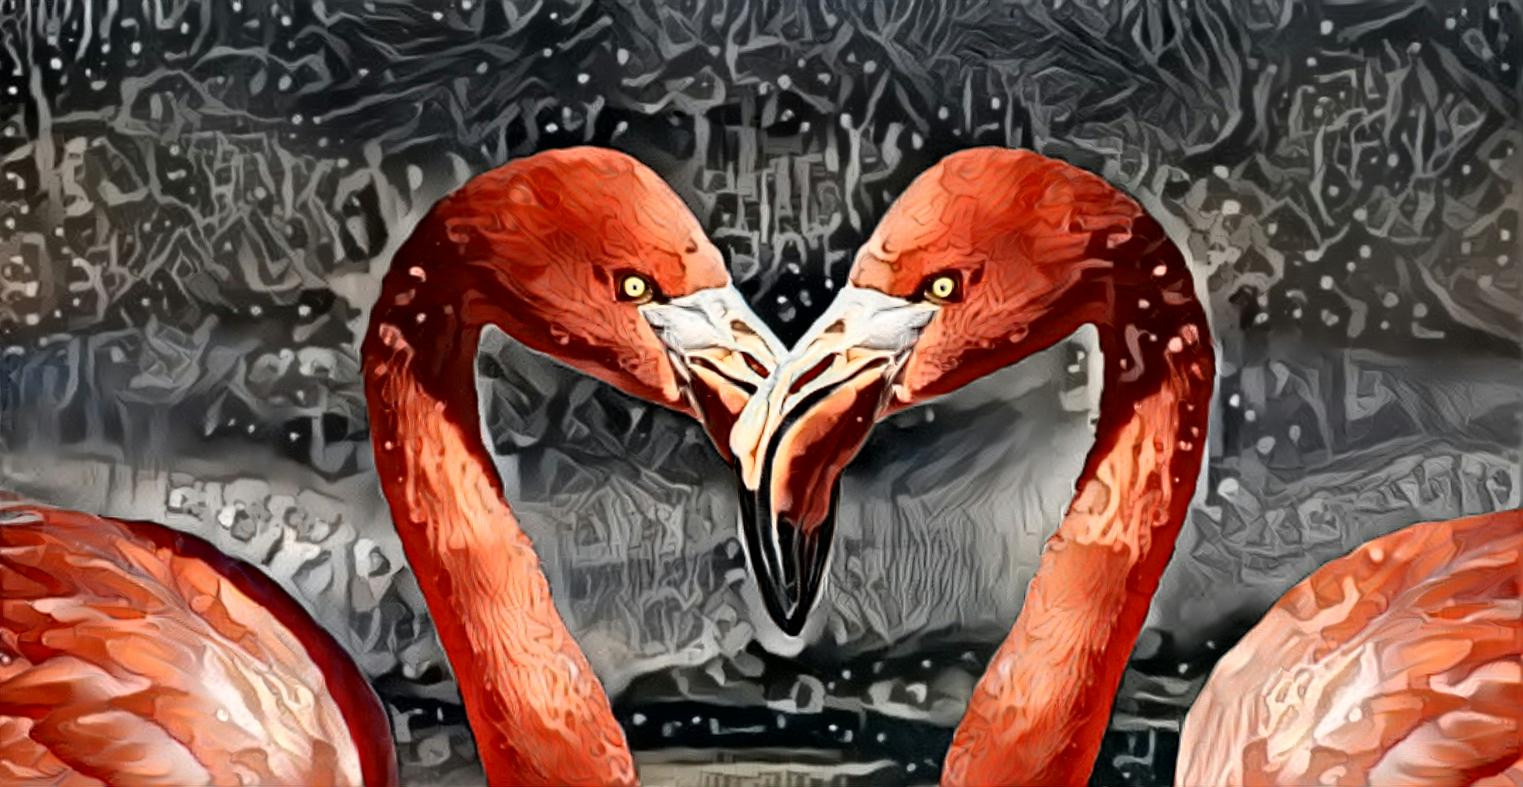 Flamingo Heart